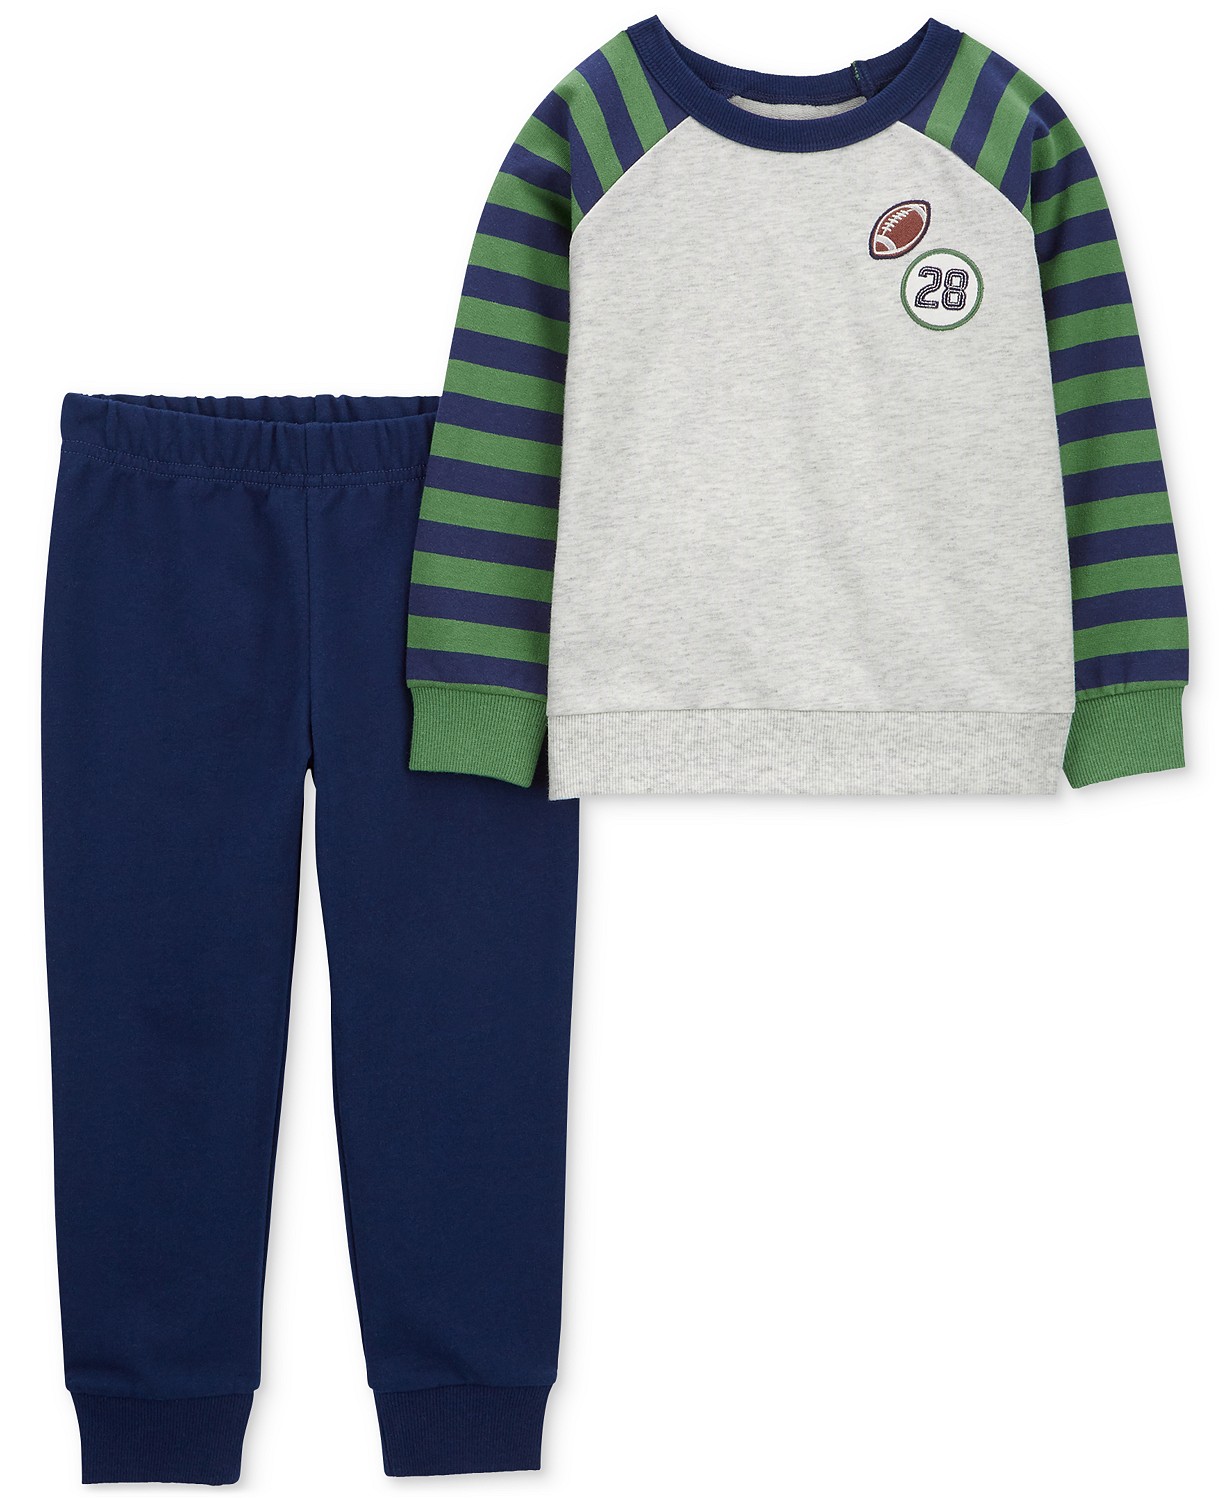 Baby Boys Football Raglan Shirt and Pants 2 Piece Set